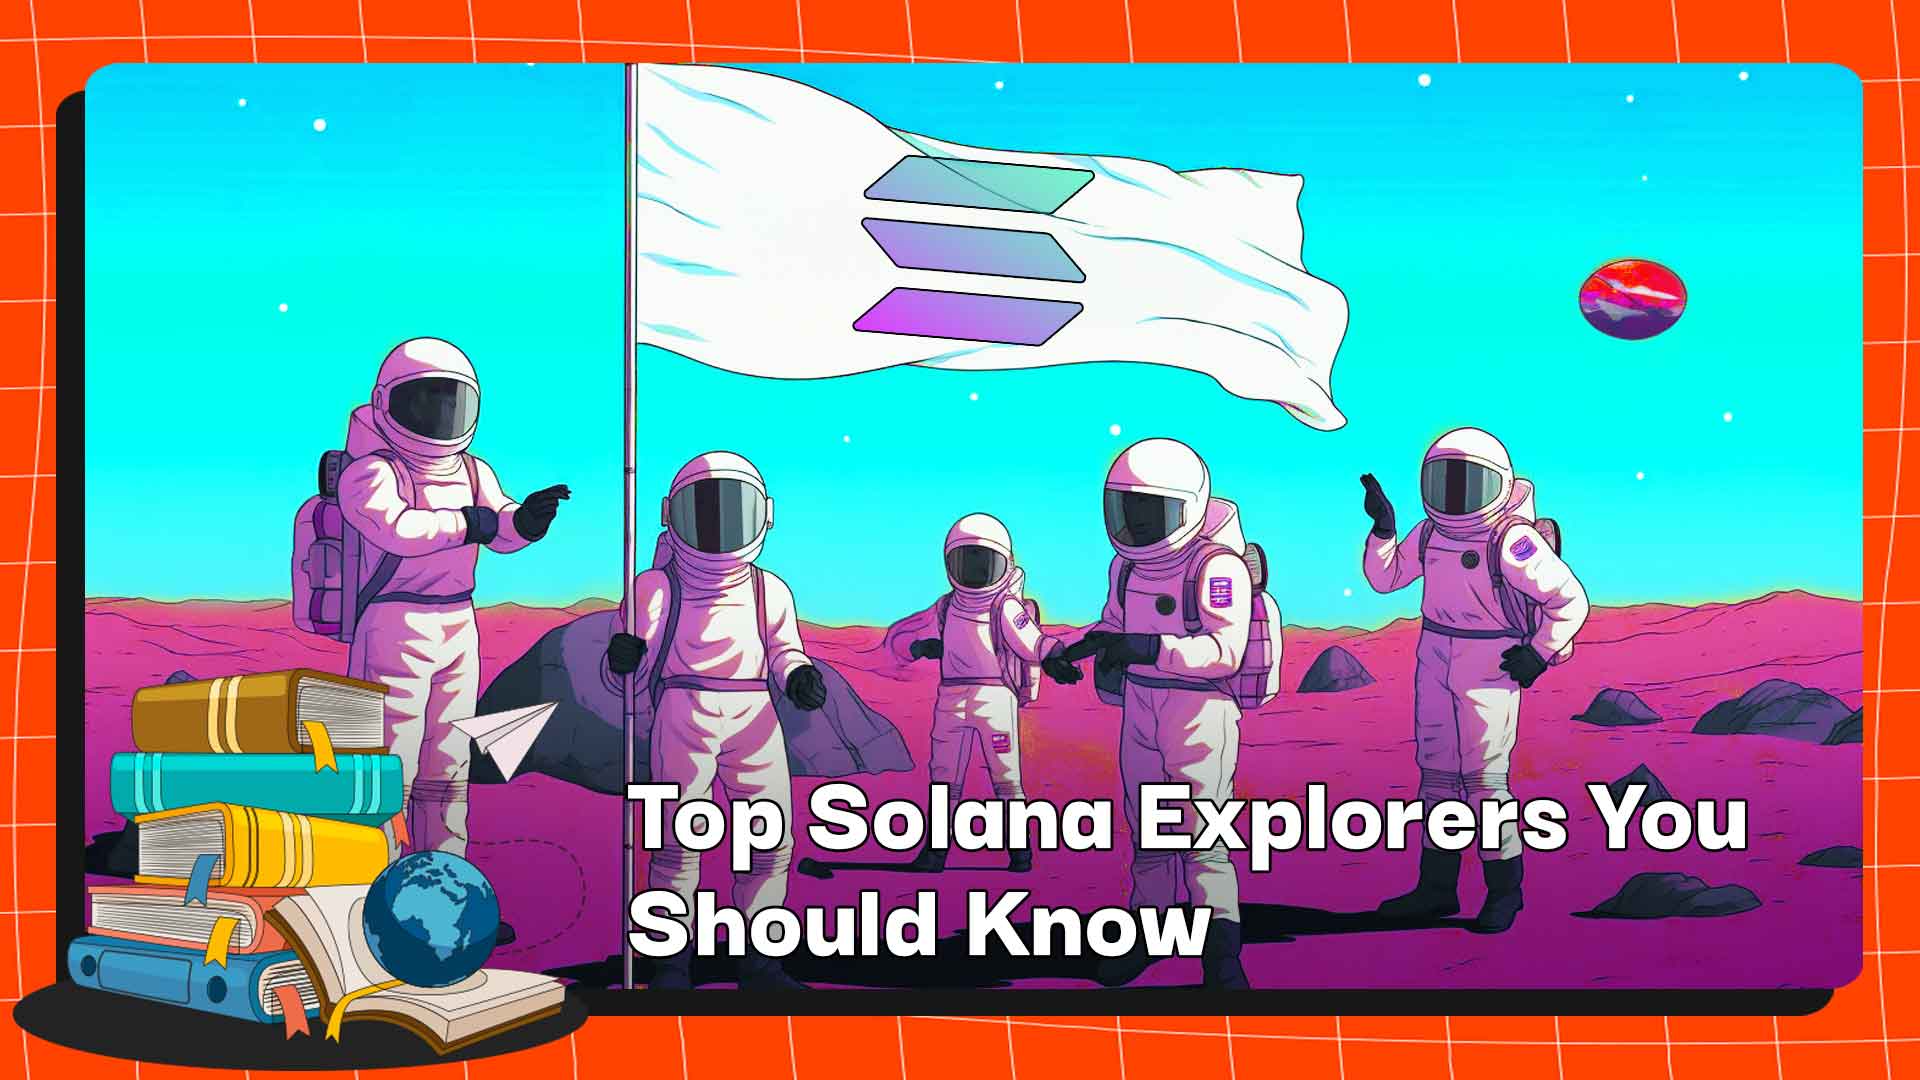 Top Solana Explorers You Should Know